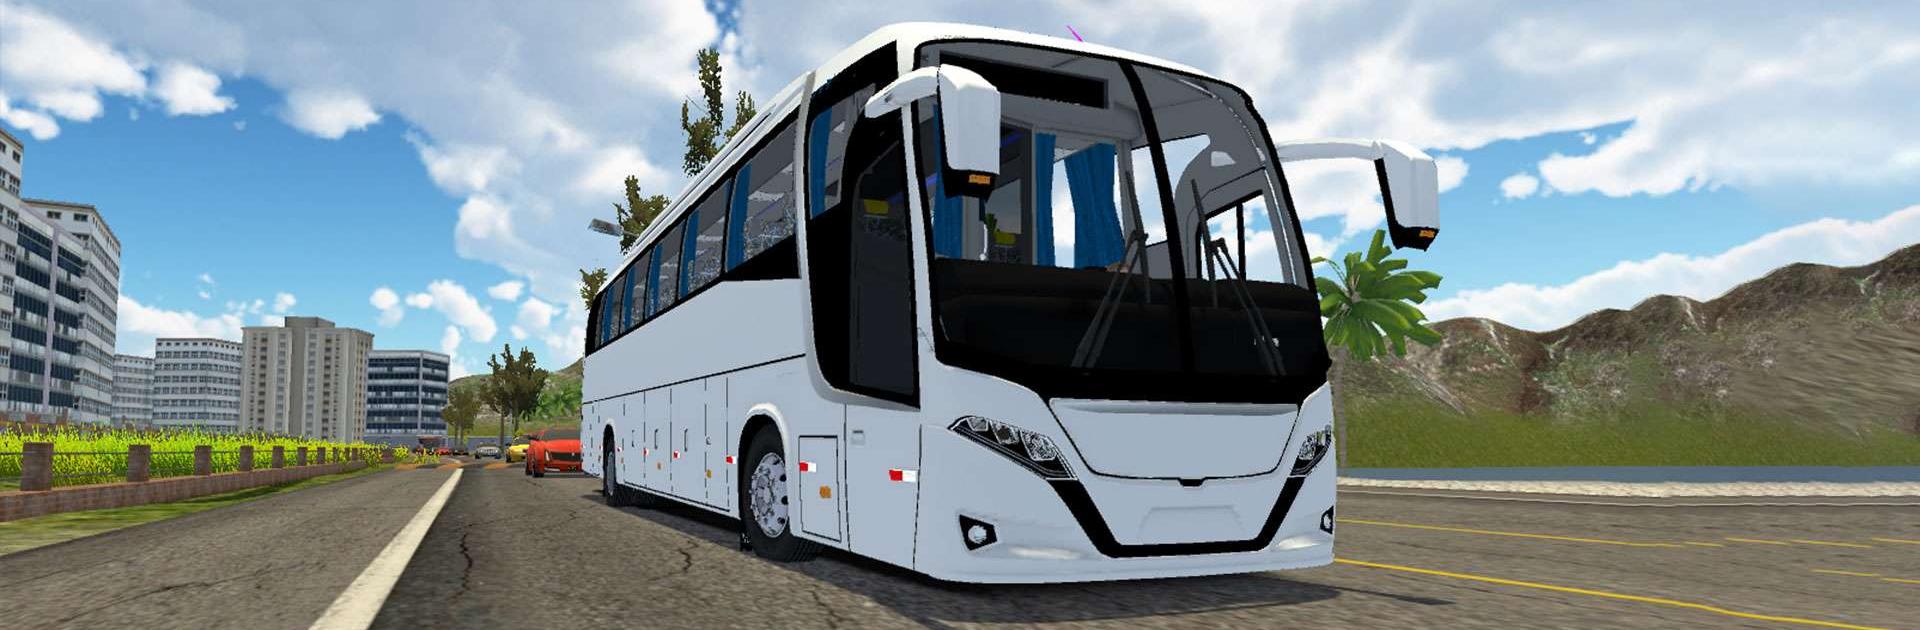 Proton Bus Simulator - Novo vídeo